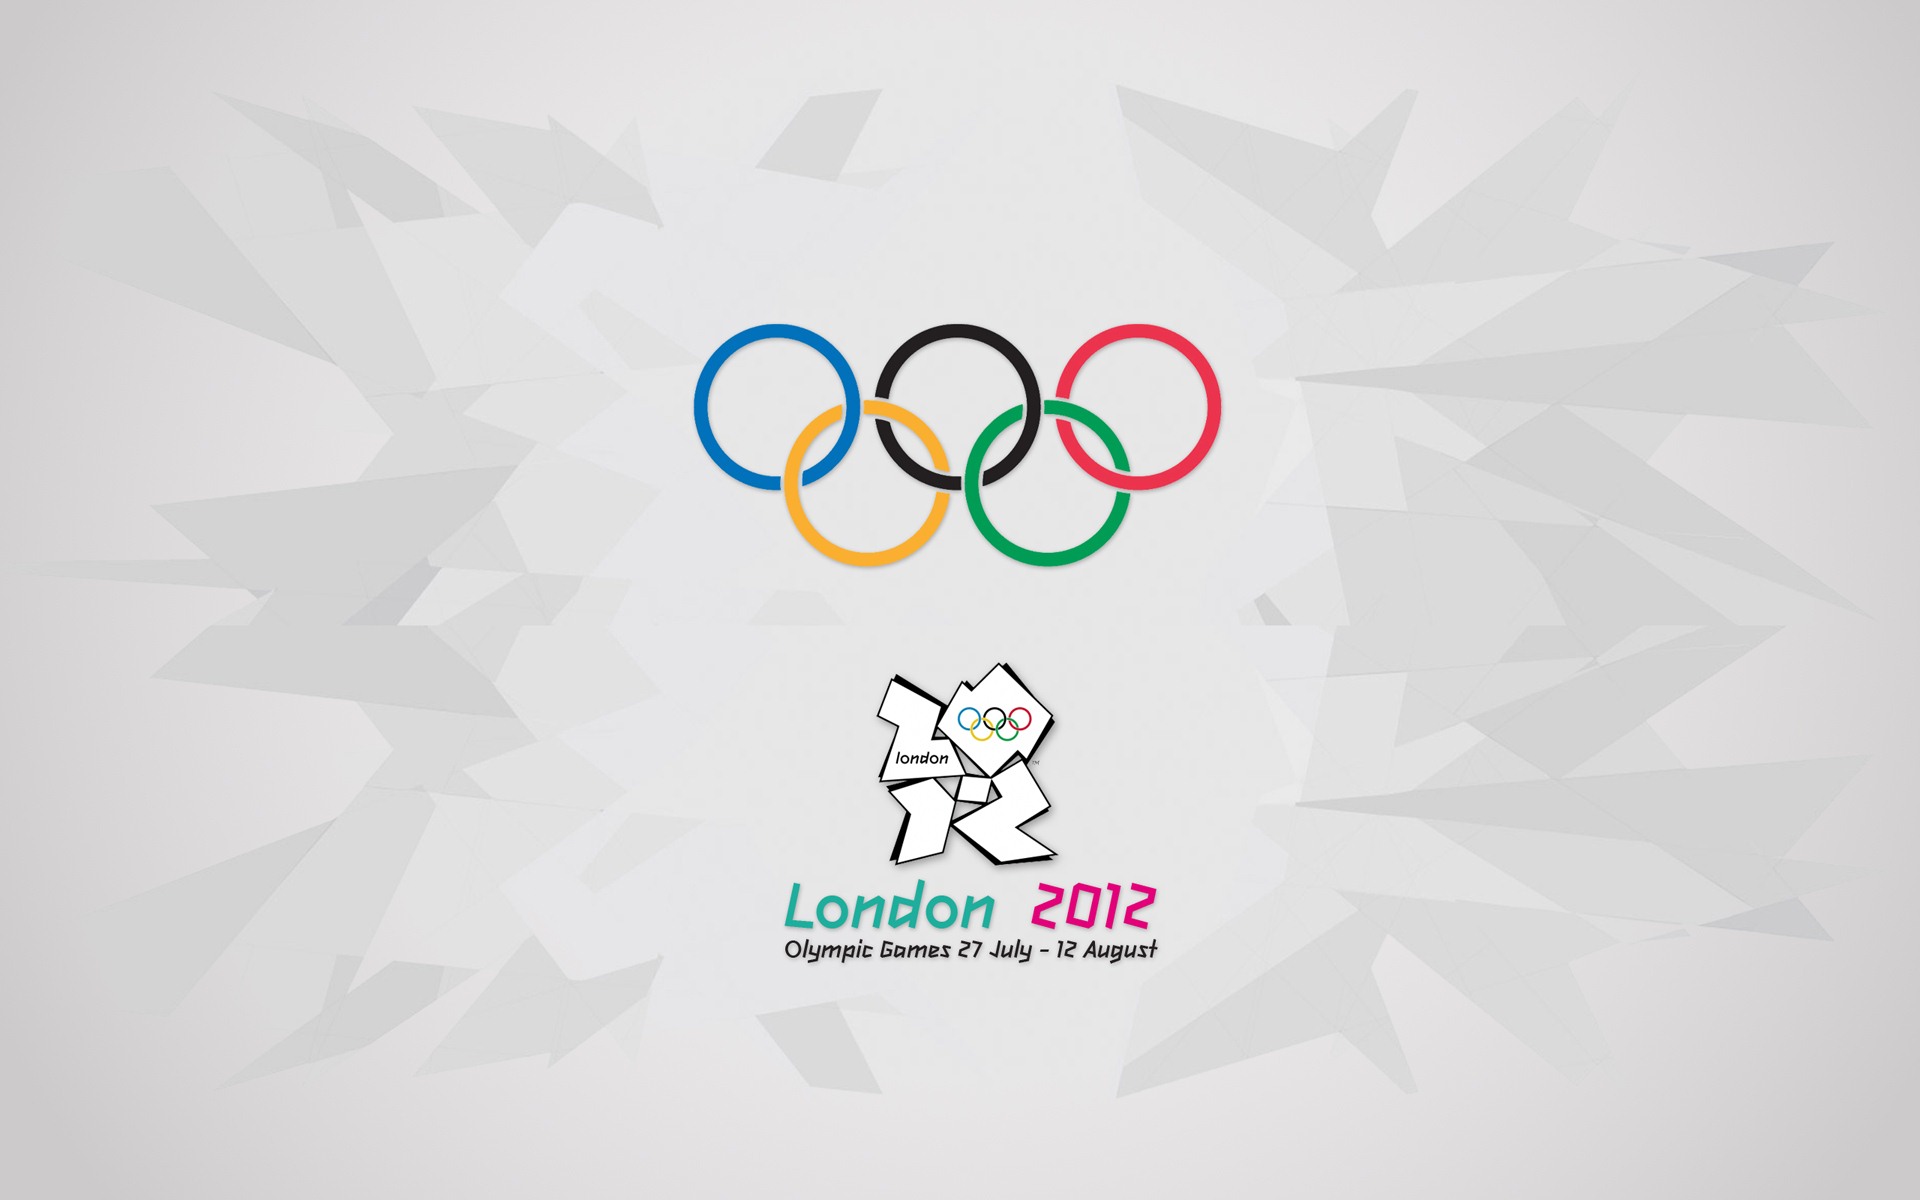 London 2012 Olympics theme wallpapers (1) #20 - 1920x1200